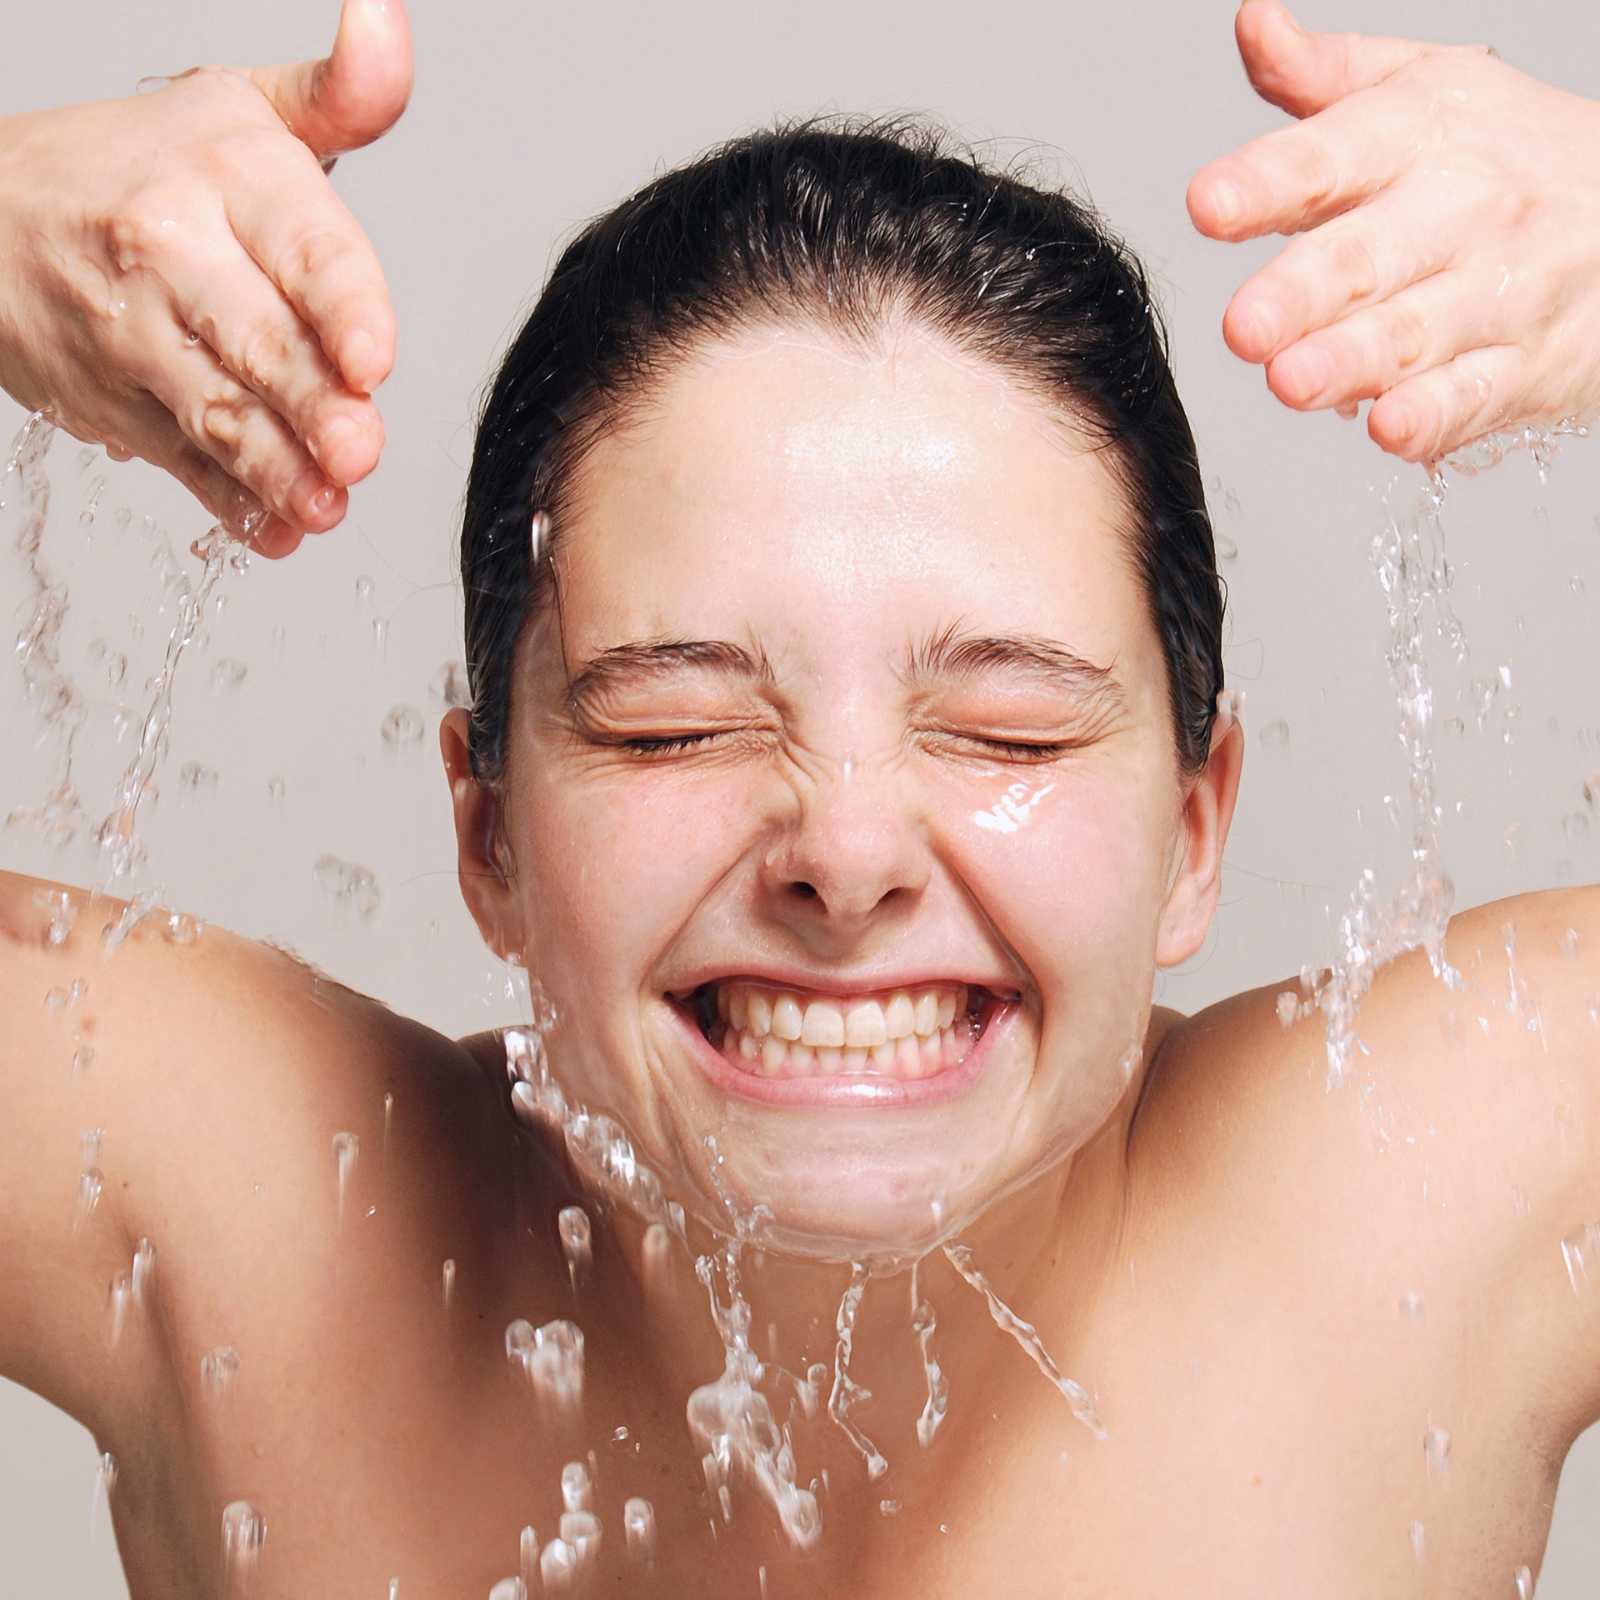 woman splashing herself with water